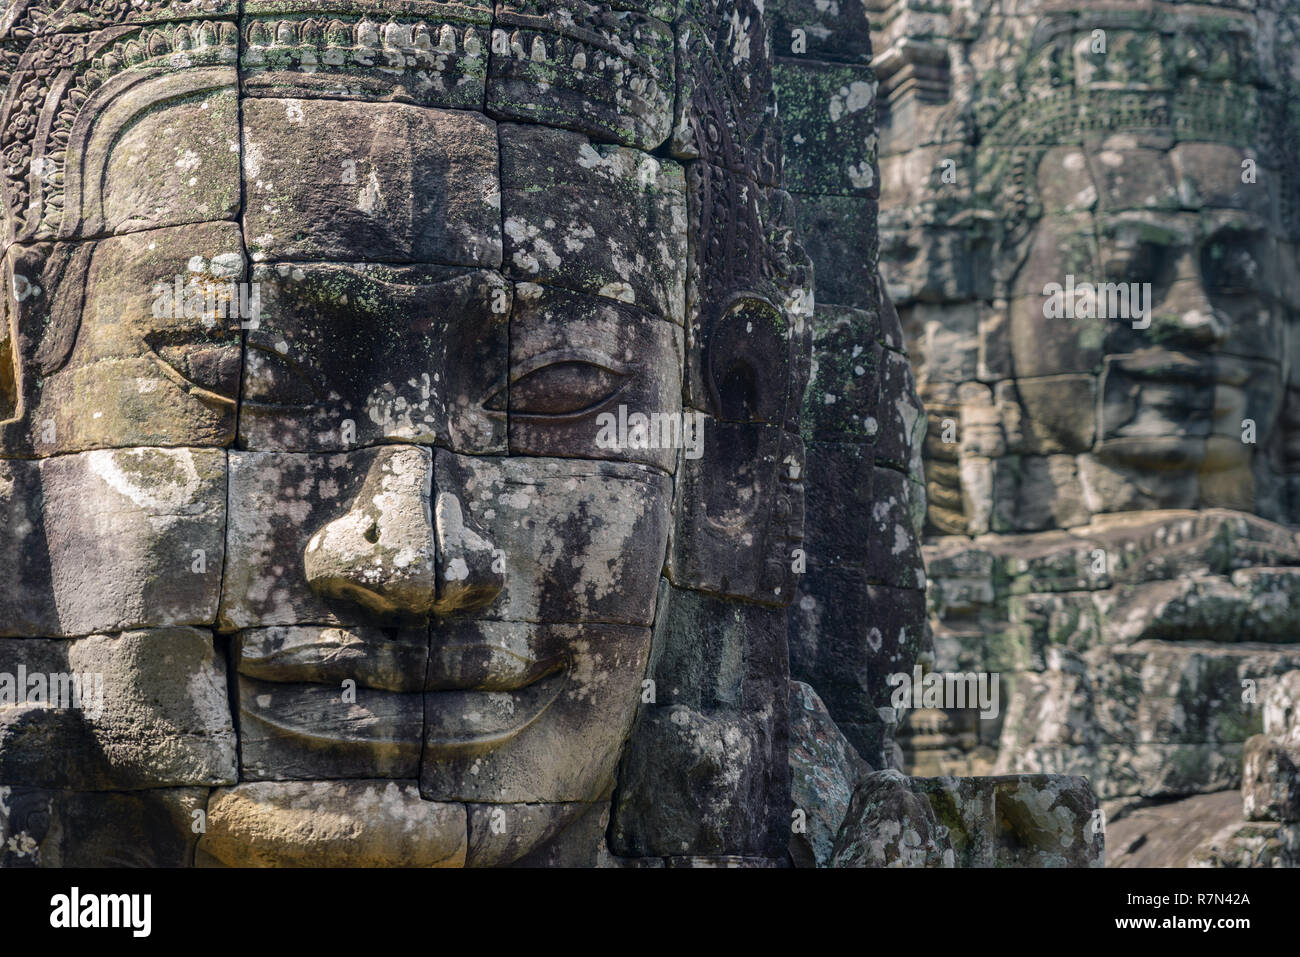 Stein Gesichter in Angkor Thom Tempel, selektive konzentrieren. Buddhismus meditation Konzept, weltberühmten Reiseziel, Kambodscha Tourismus. Stockfoto